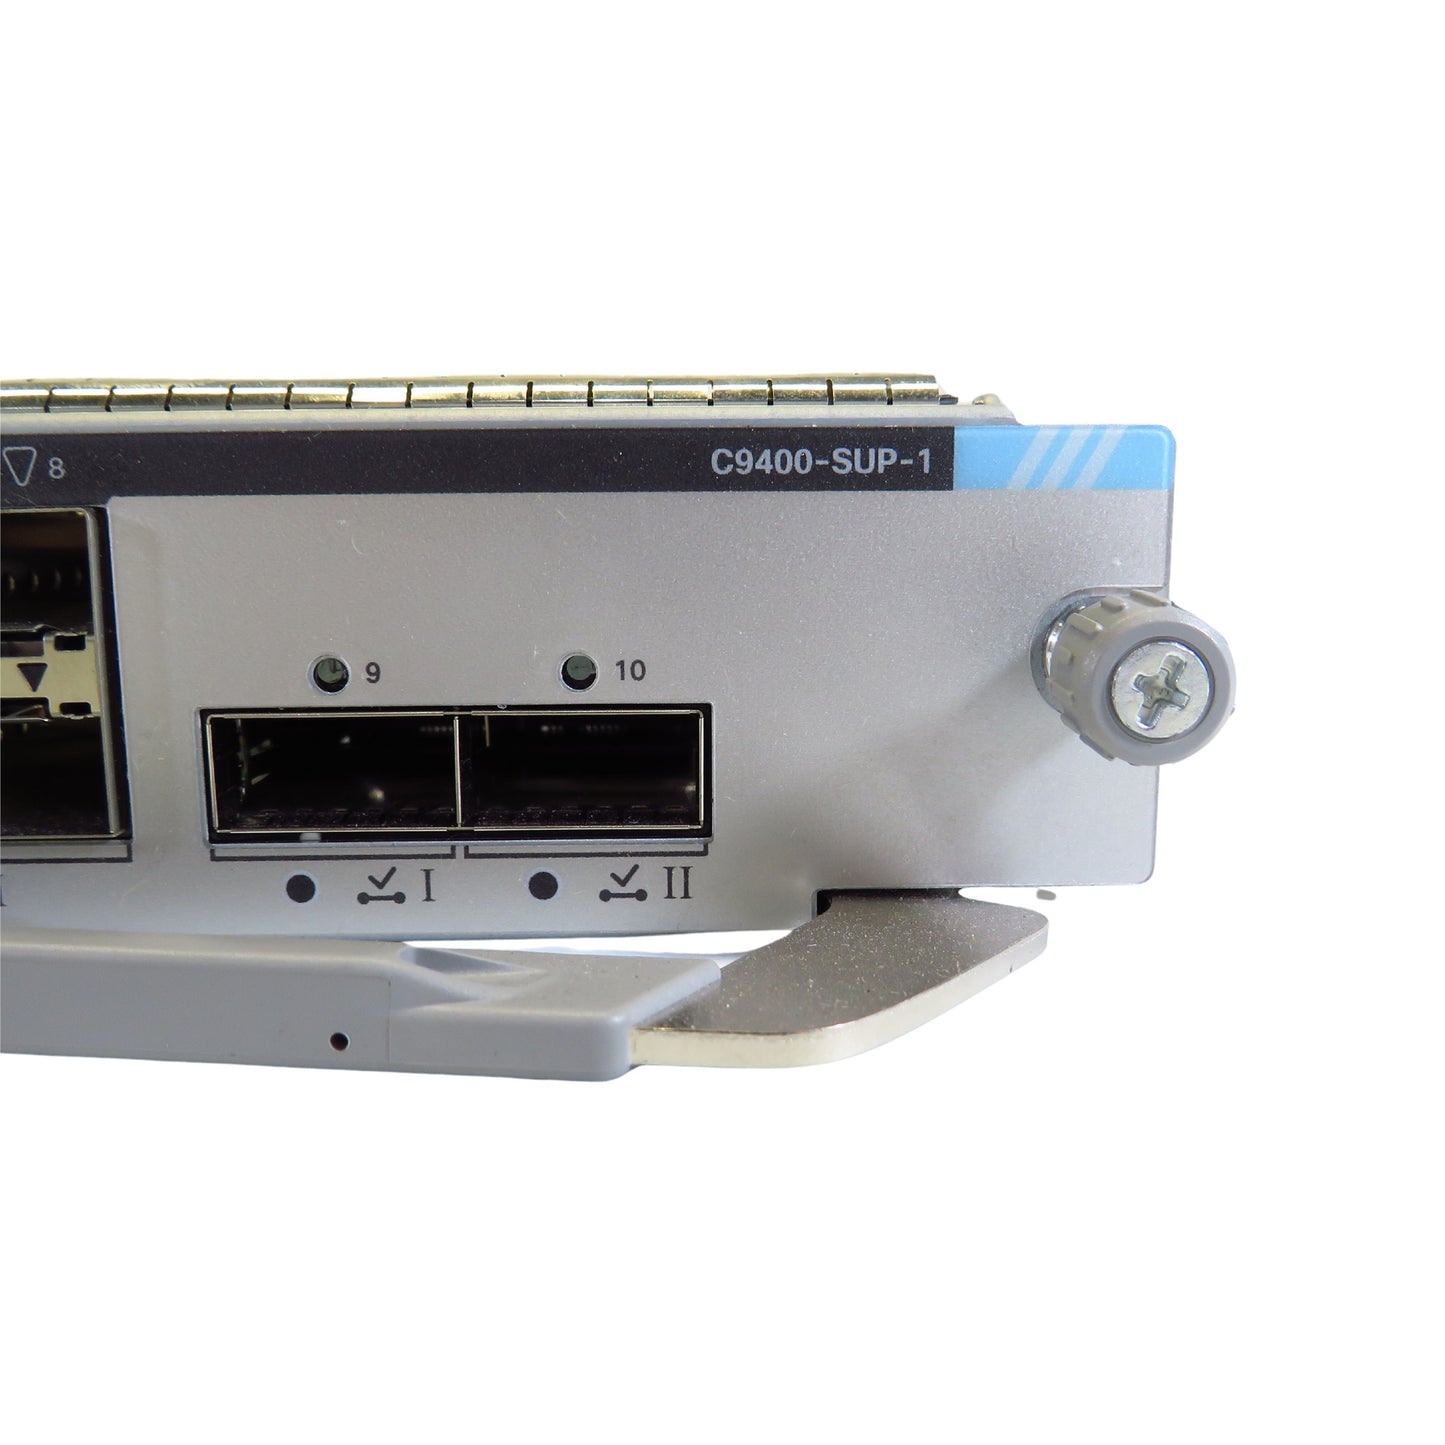 Cisco C9400-SUP-1 Catalyst 9400 Series Supervisor Engine v1 Module (Refurbished)